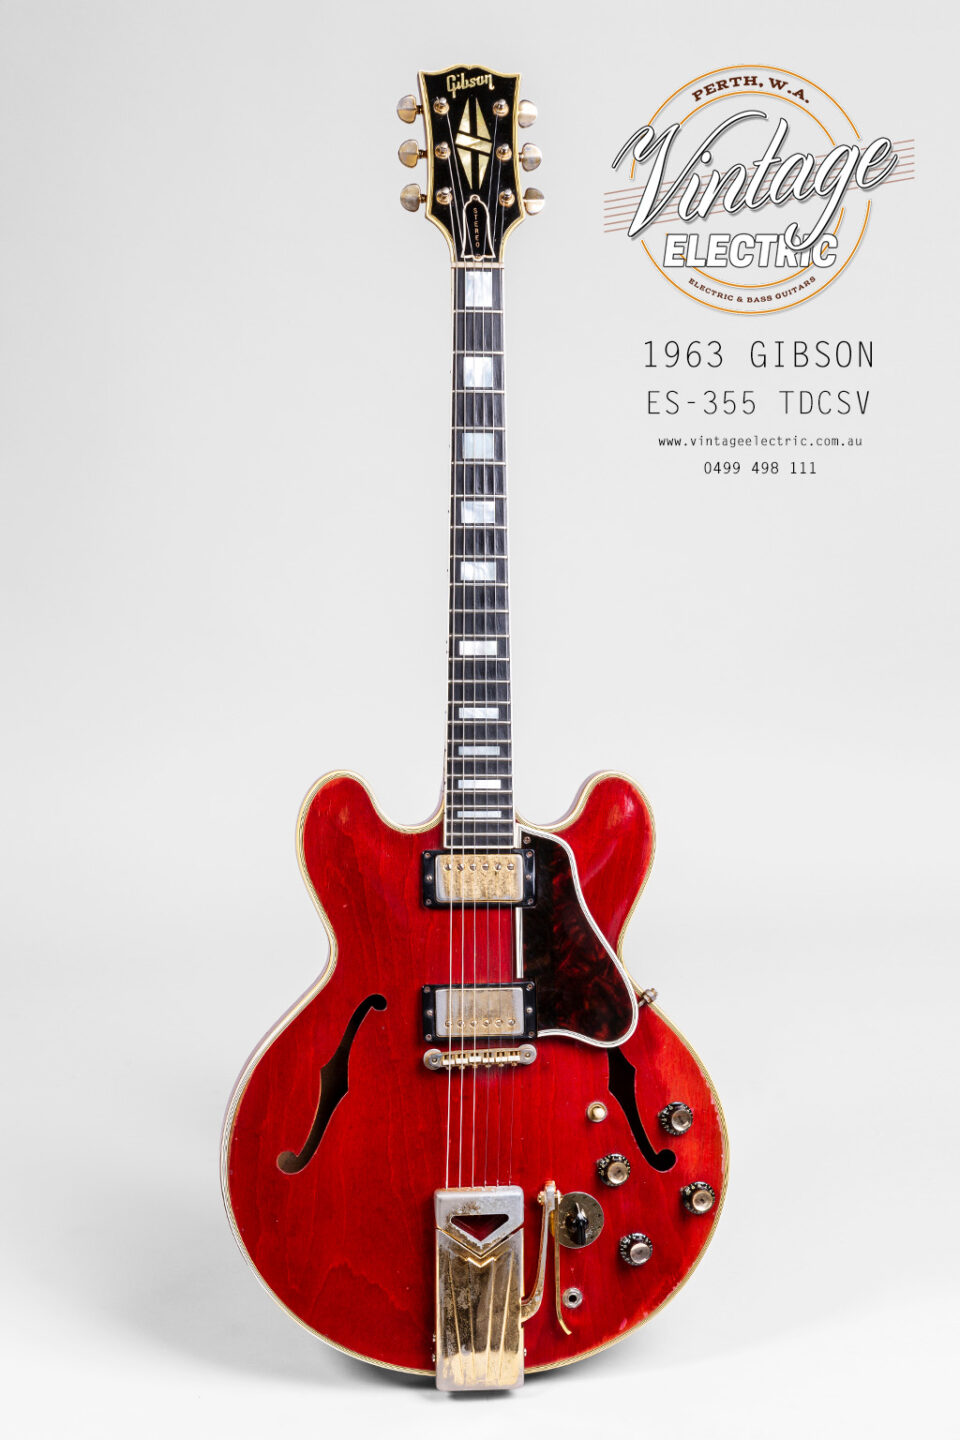 1963 Gibson ES-355 TDCSV